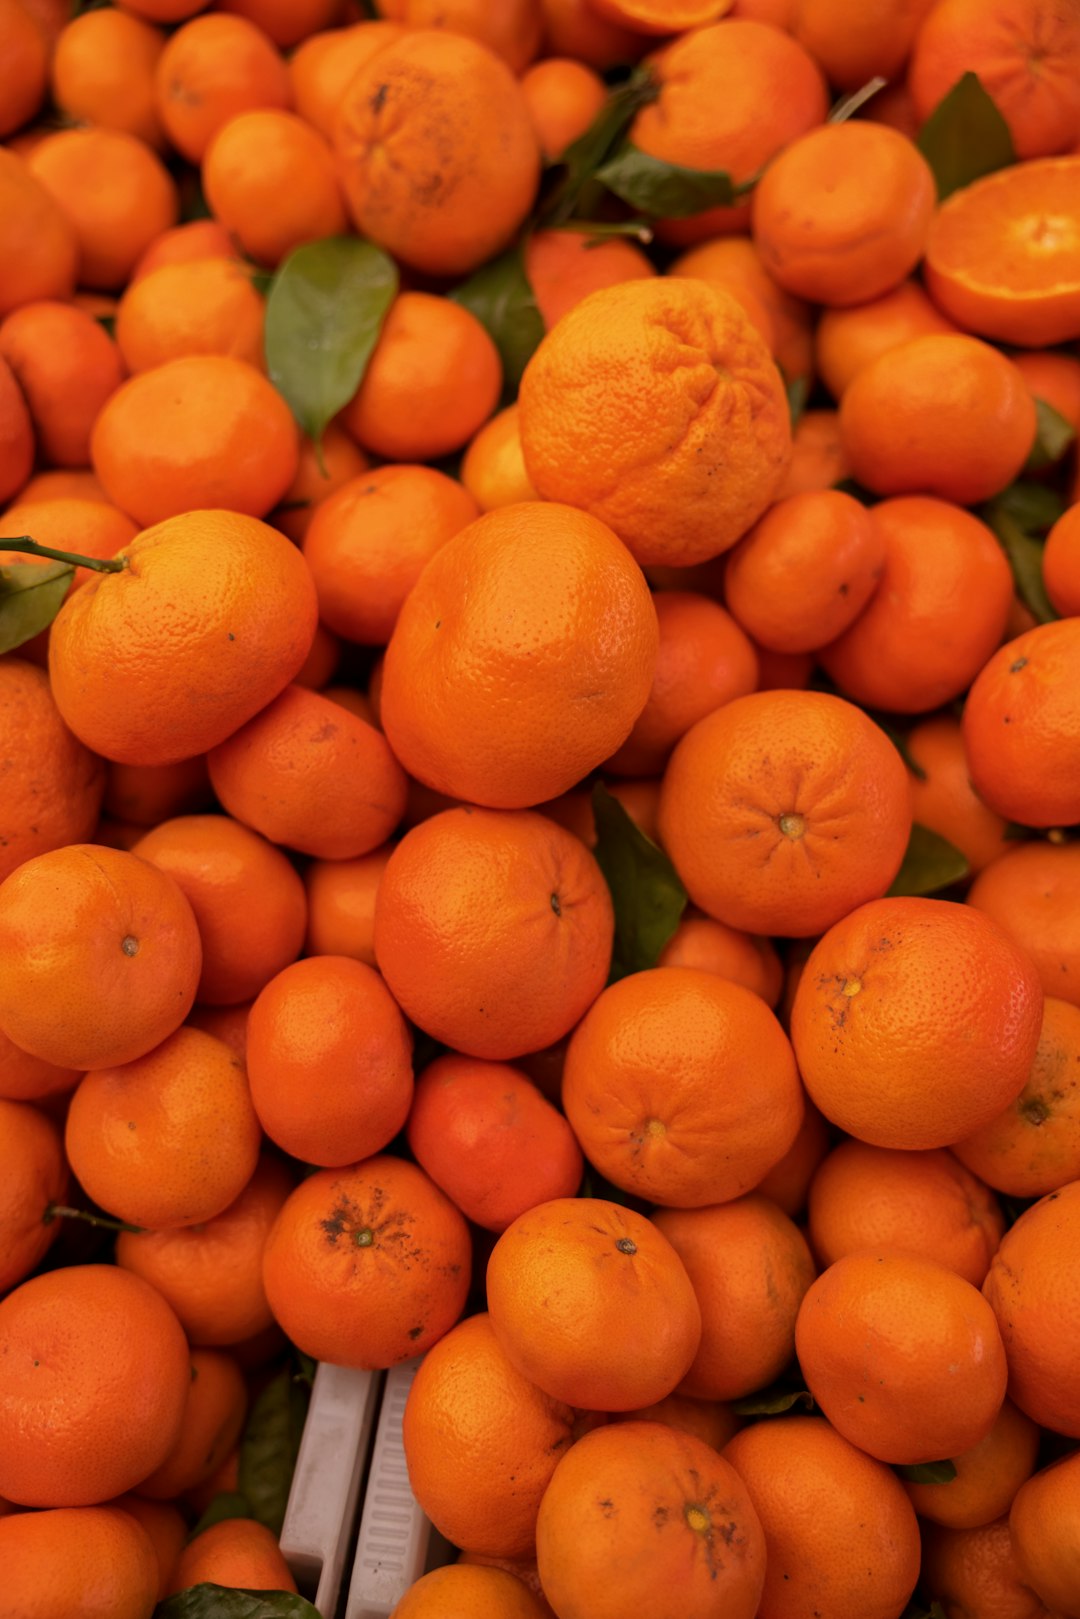 orange fruits in tilt shift lens